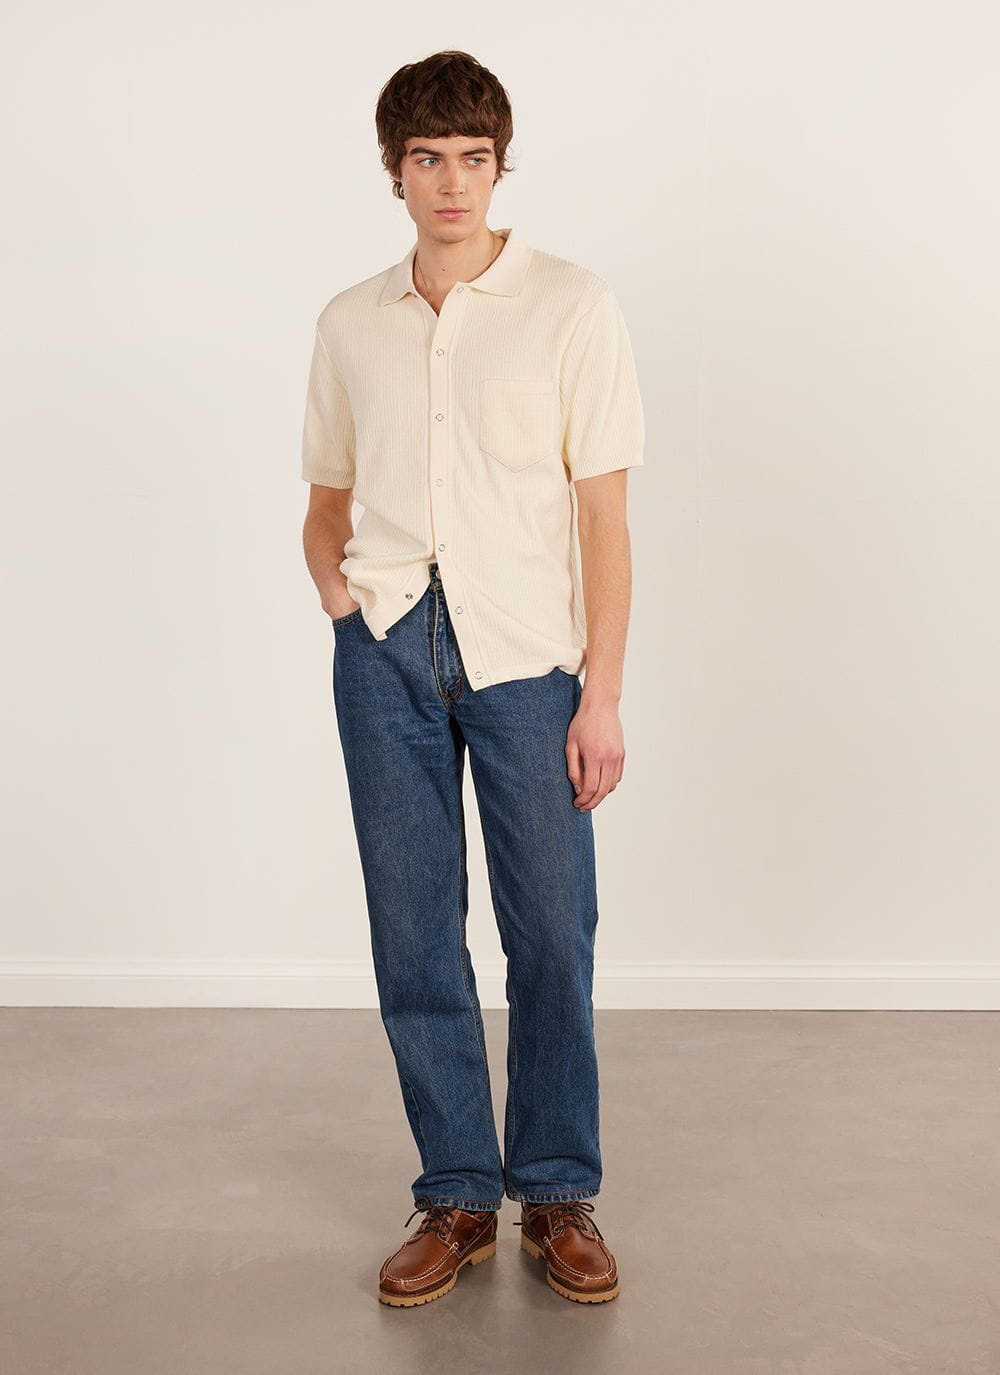 Men's Short Sleeve Knitted Shirt | Cuban Collar | Cream & Percival Menswear